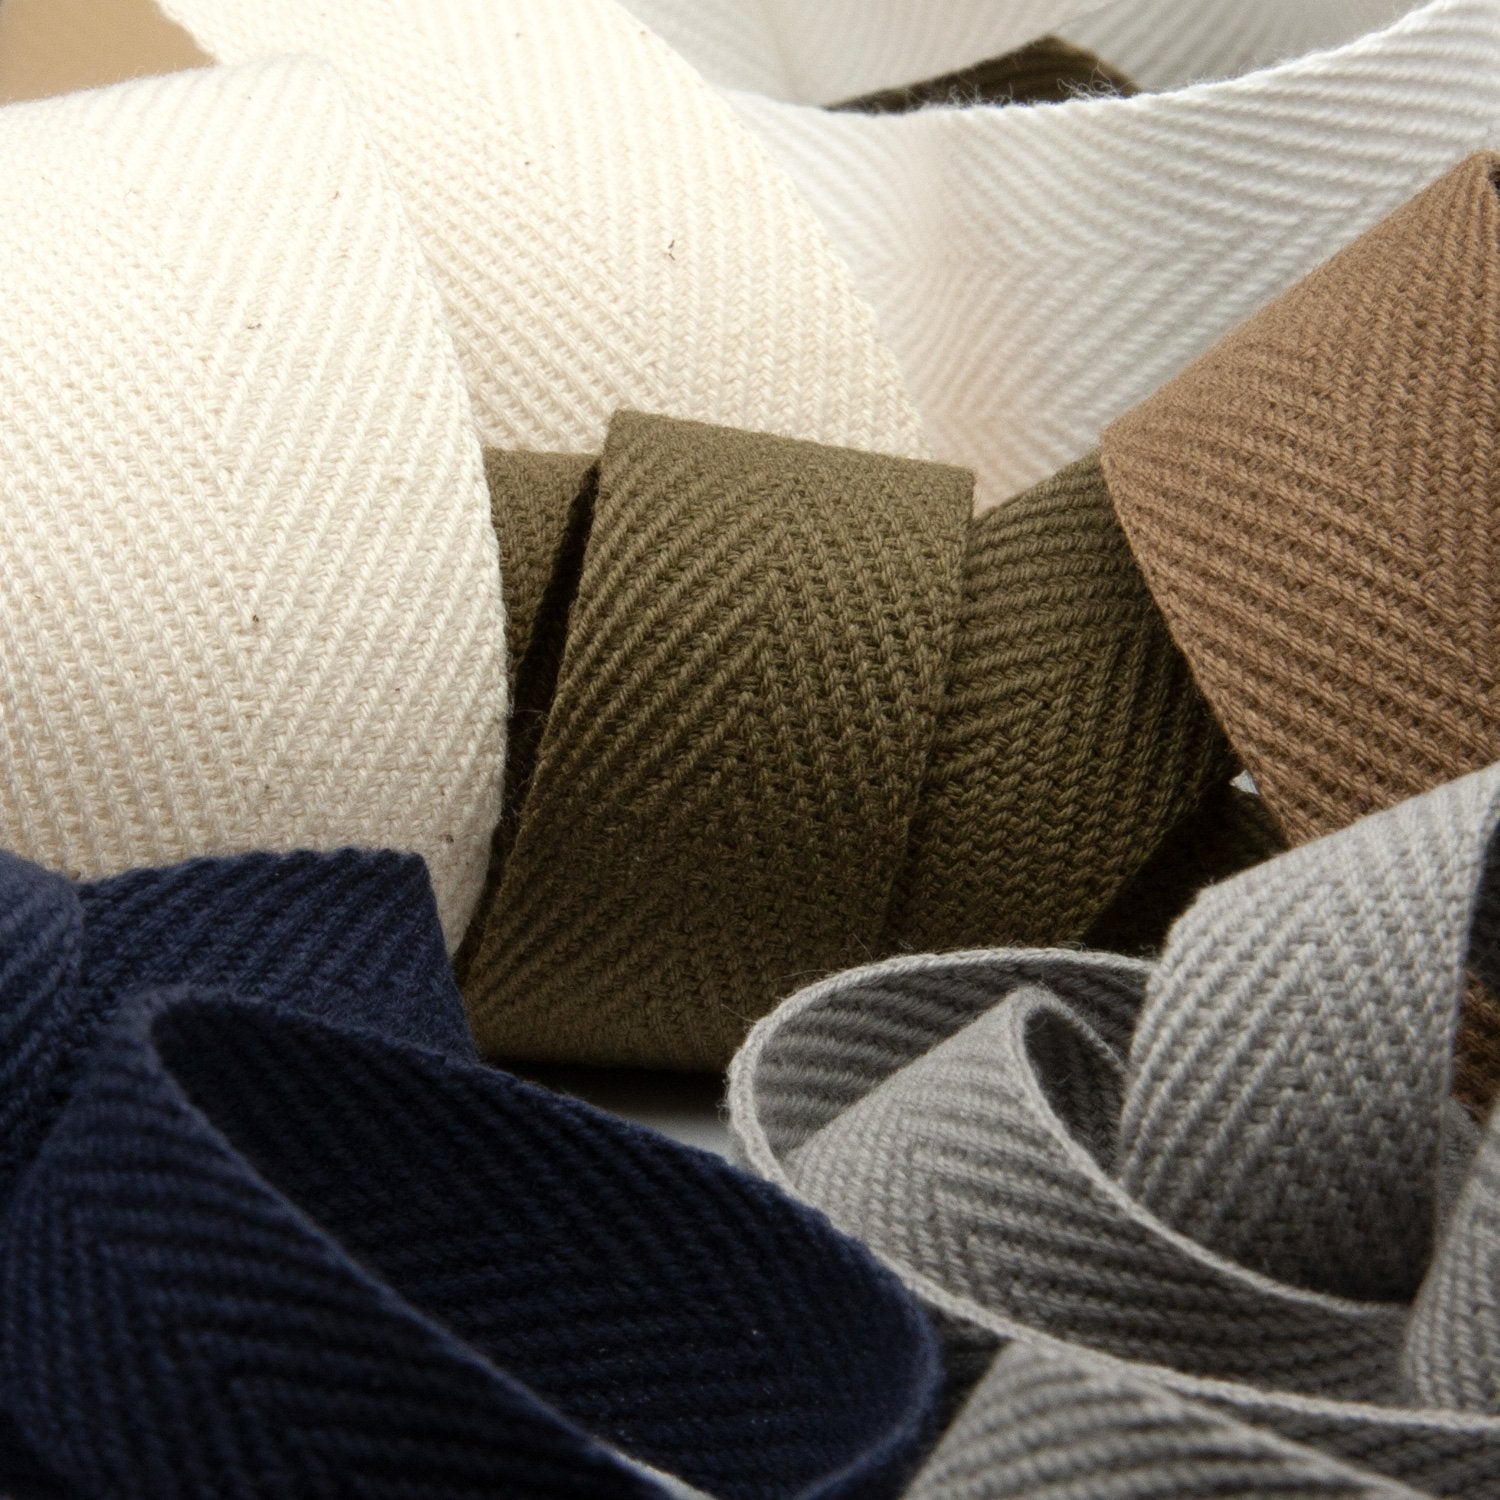 FUJIYAMA RIBBON [Wholesale] Thick Cotton Herringbone Ribbon 20mm 50 Meters Roll White